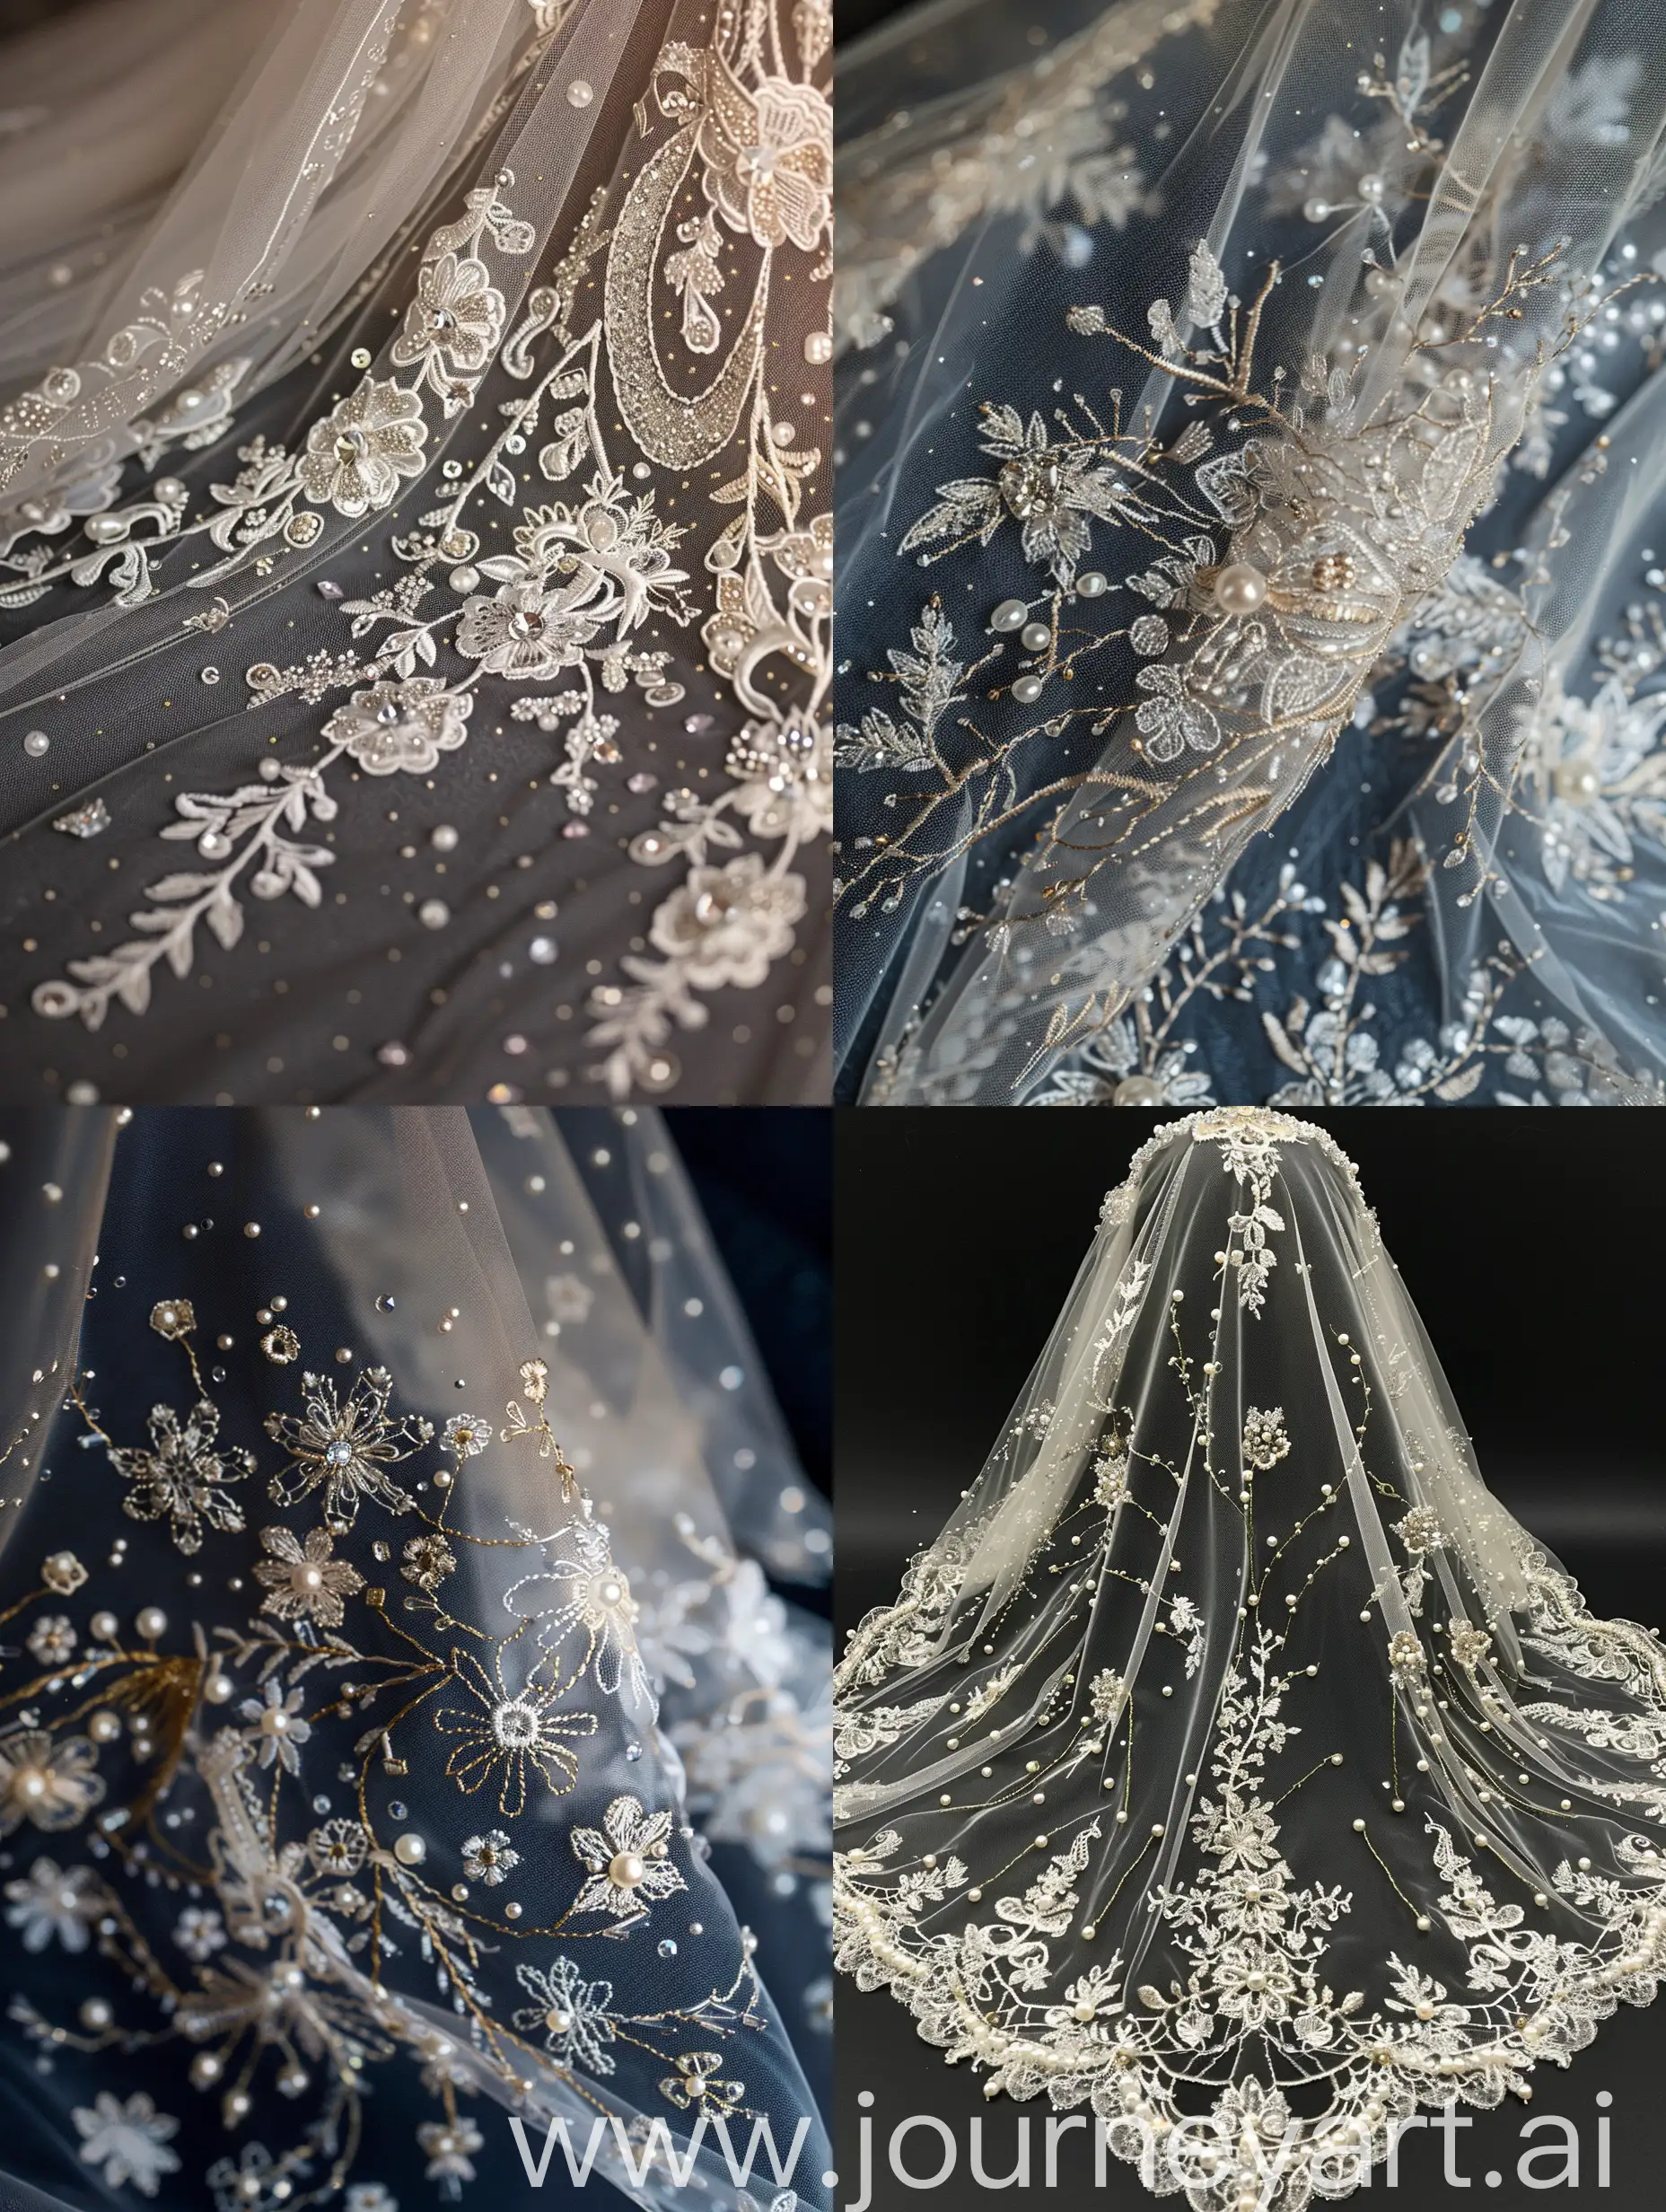 Crystal, diamond, pearl, lace, gold thread, silver thread, embroidery, bride's veil